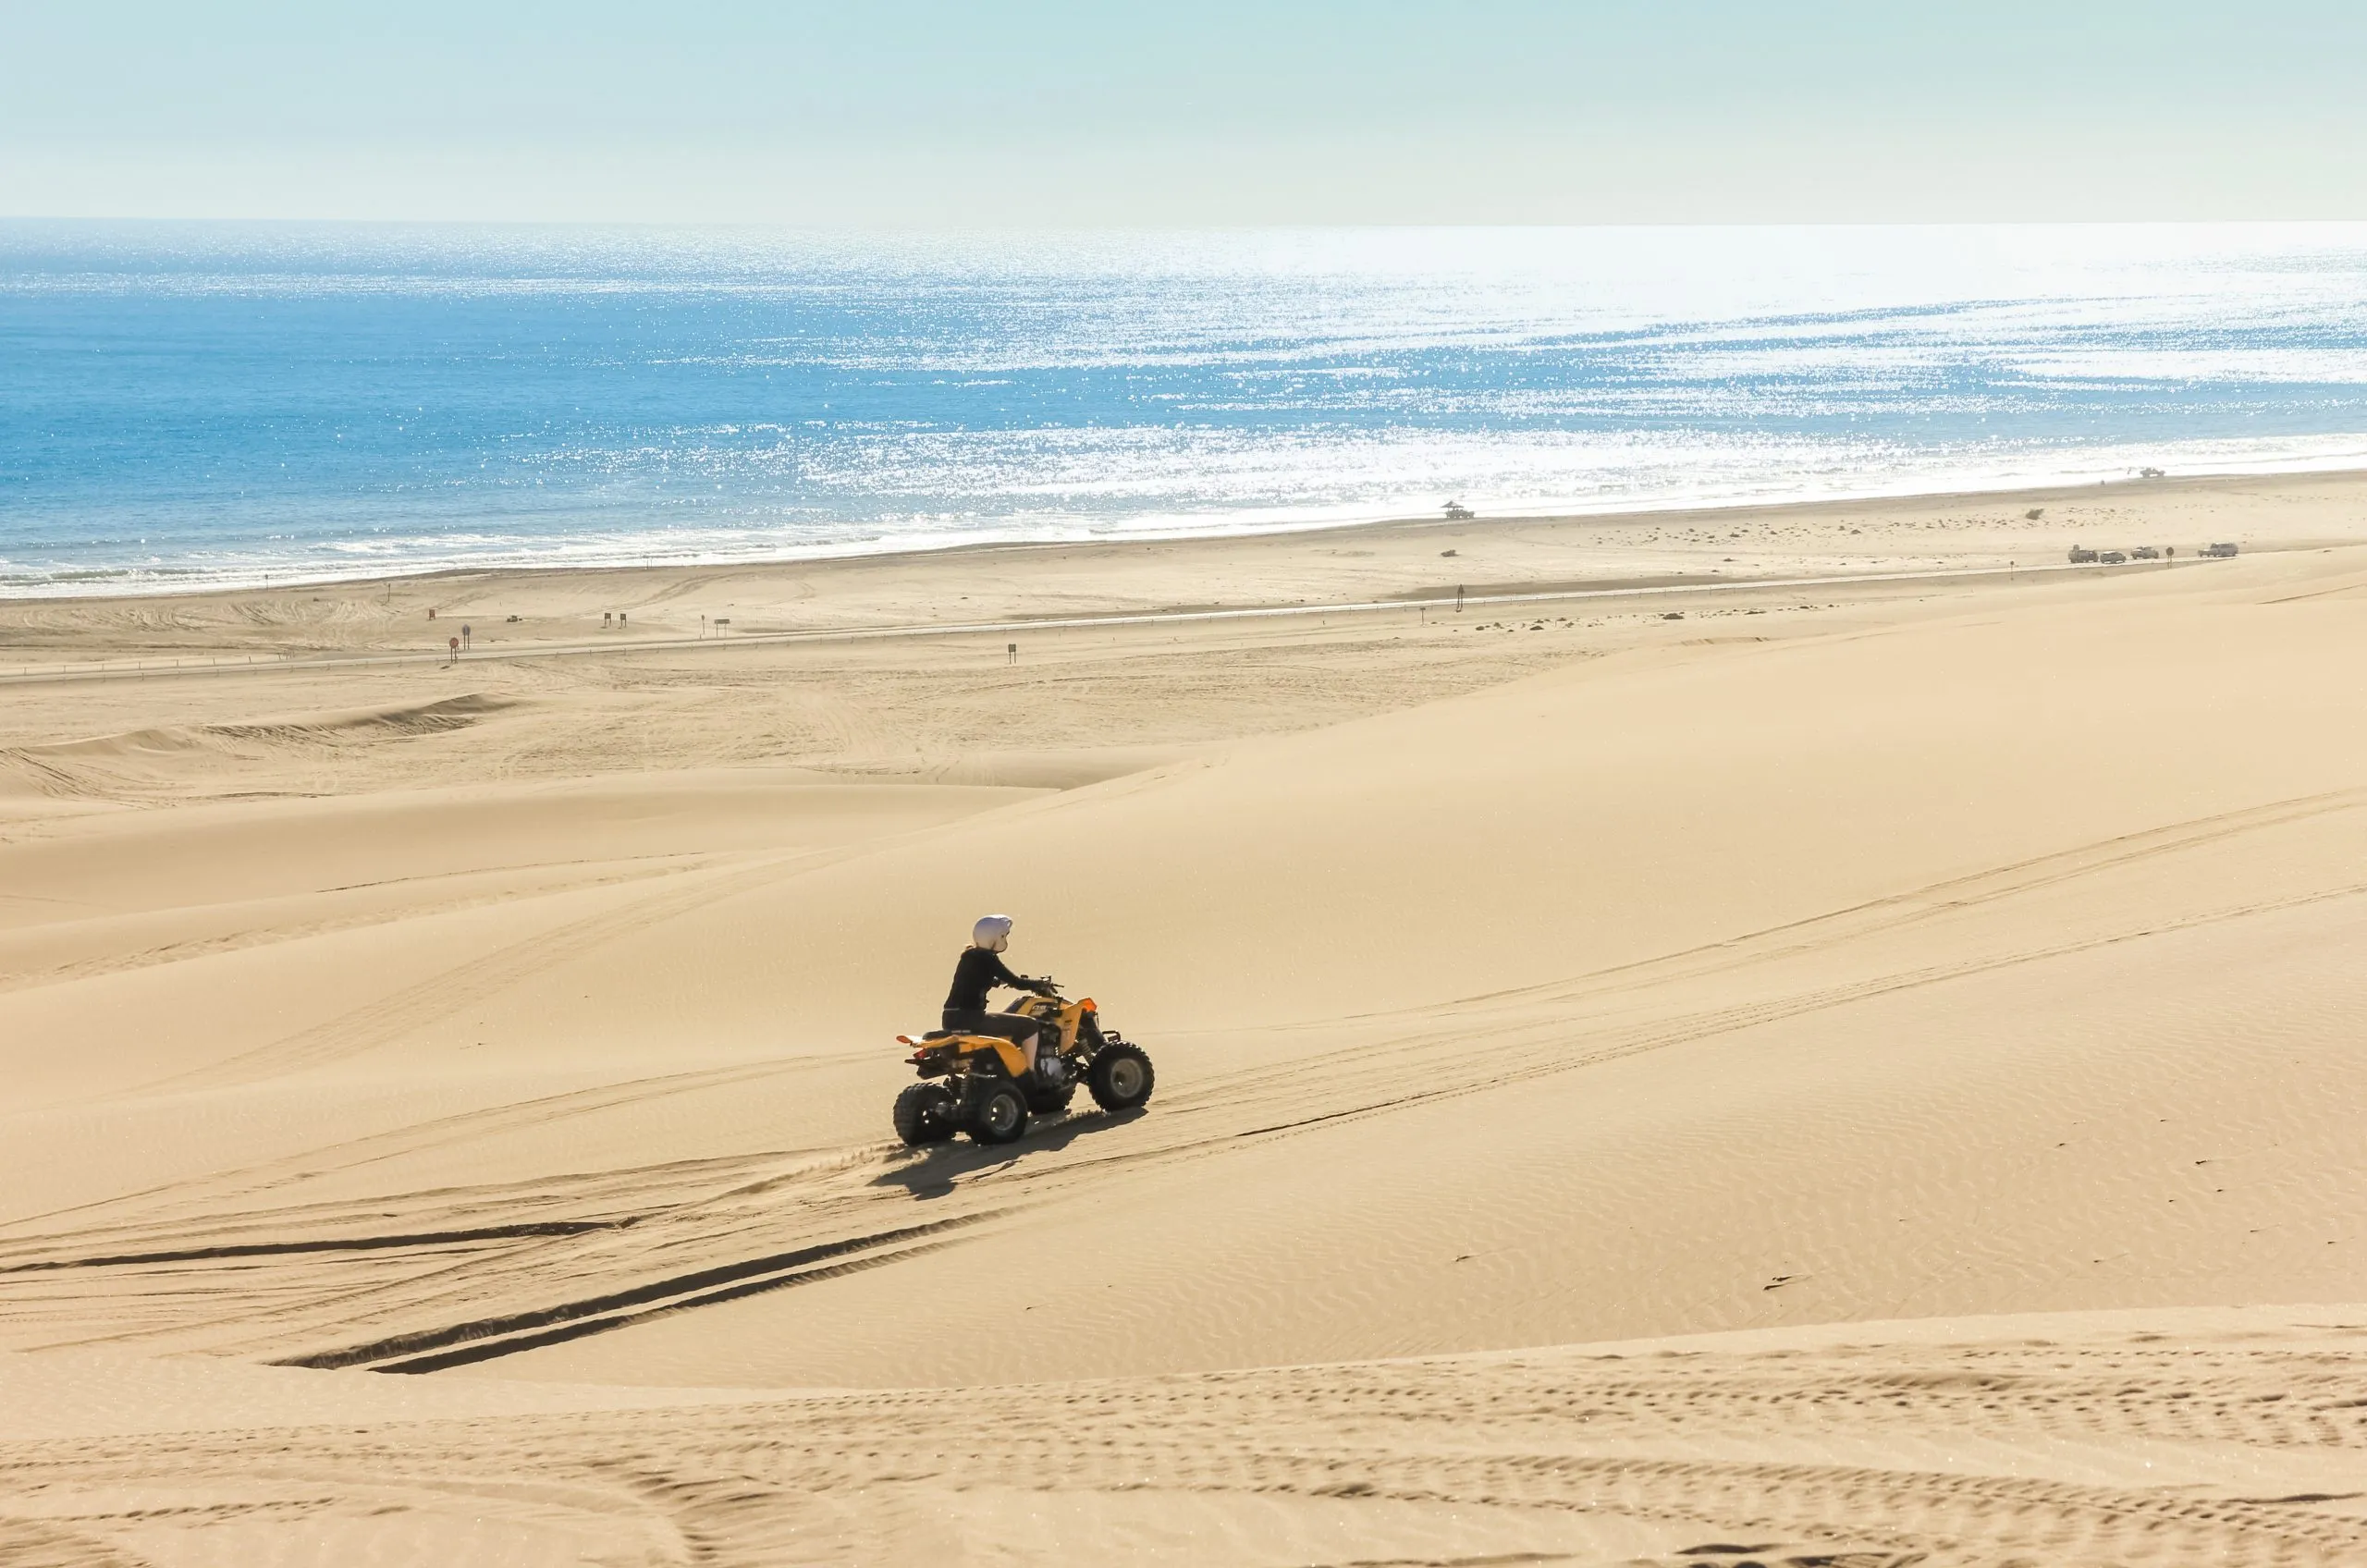 Quad driving people - One biker in sand desert dunes at ocean coast beach, Africa, Namibia, Namib, Walvis Bay, Swakopmund.